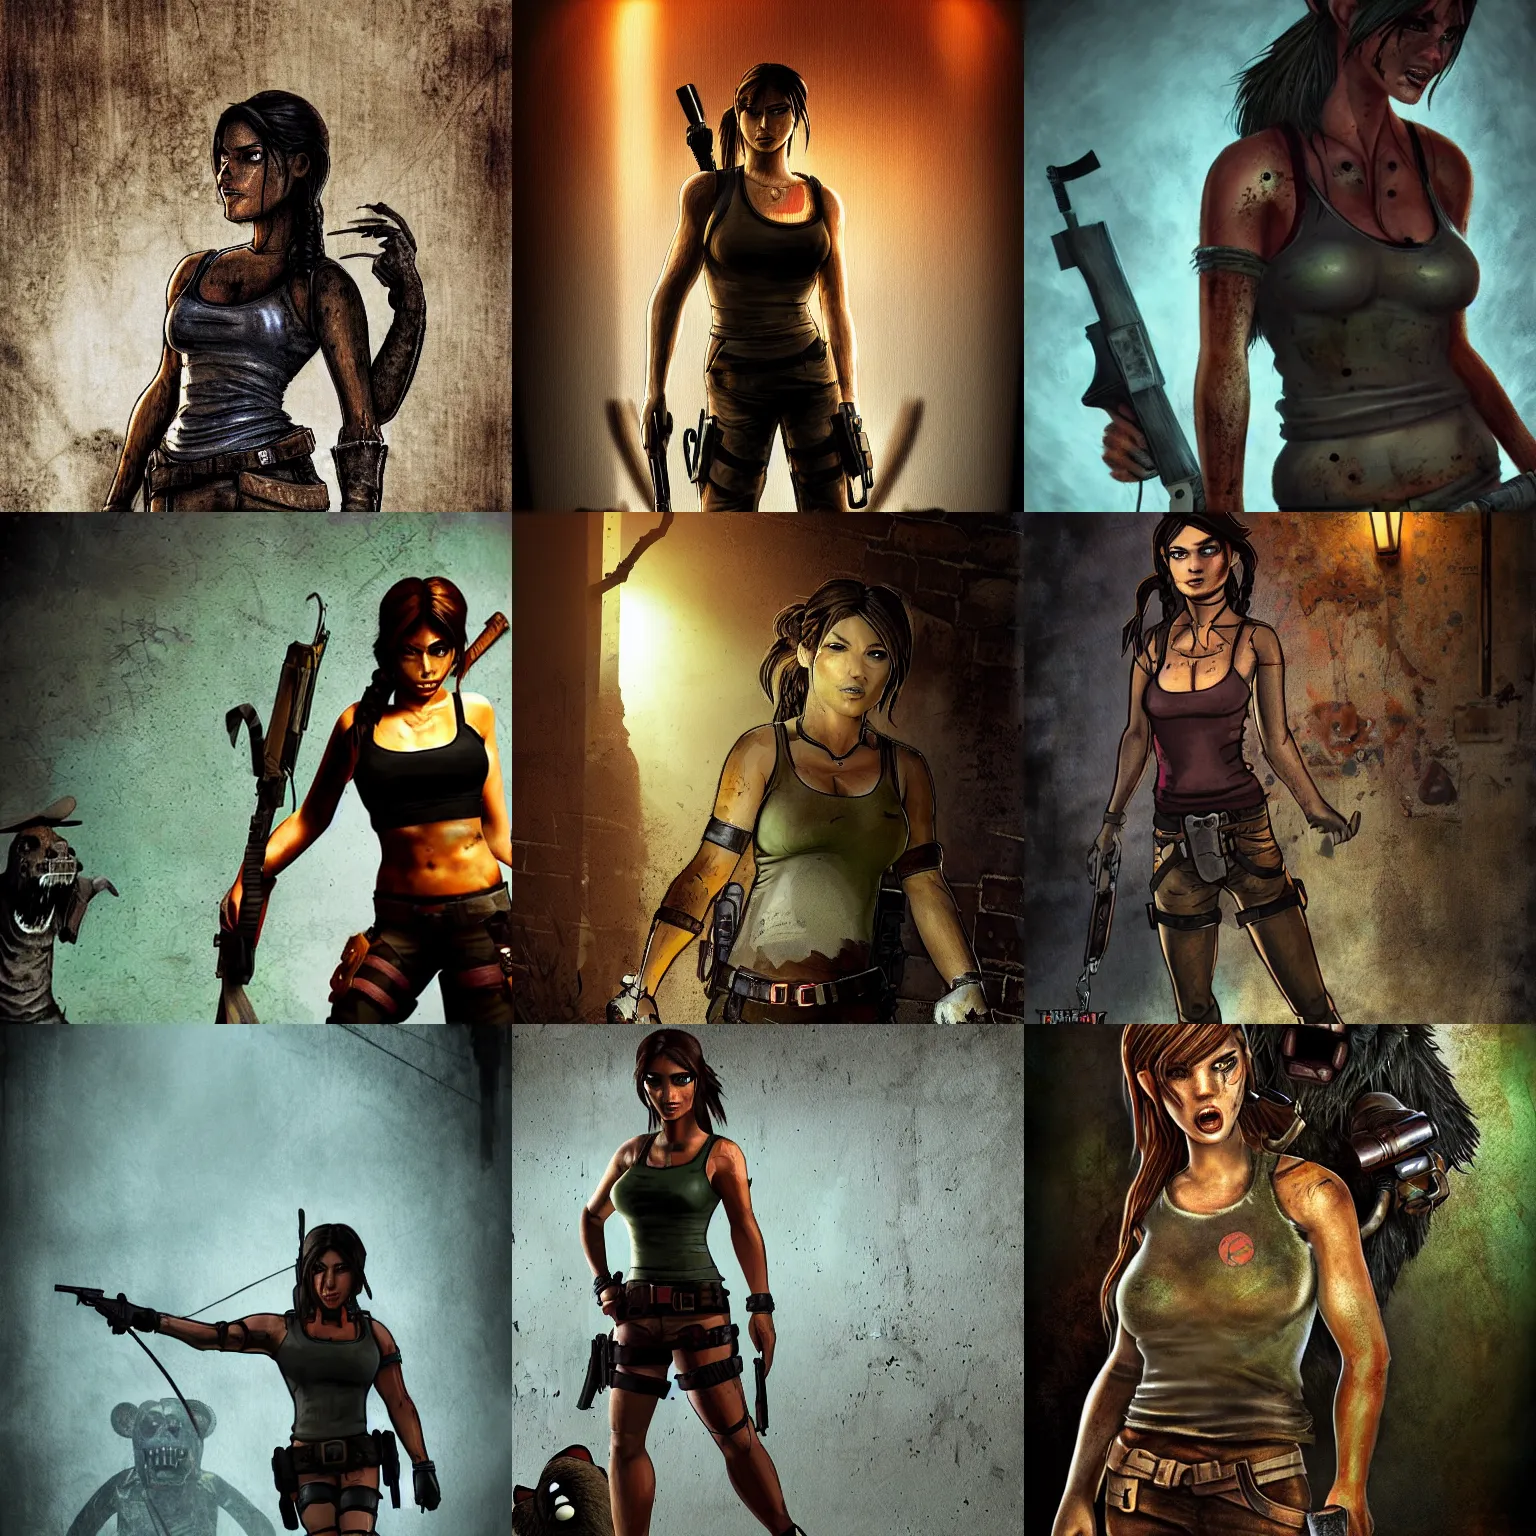 Prompt: Lara Croft meets Freddy Fazbear, scary, dark, abandoned restaurant, gloomy, promotional artwork, advertisement, closeup